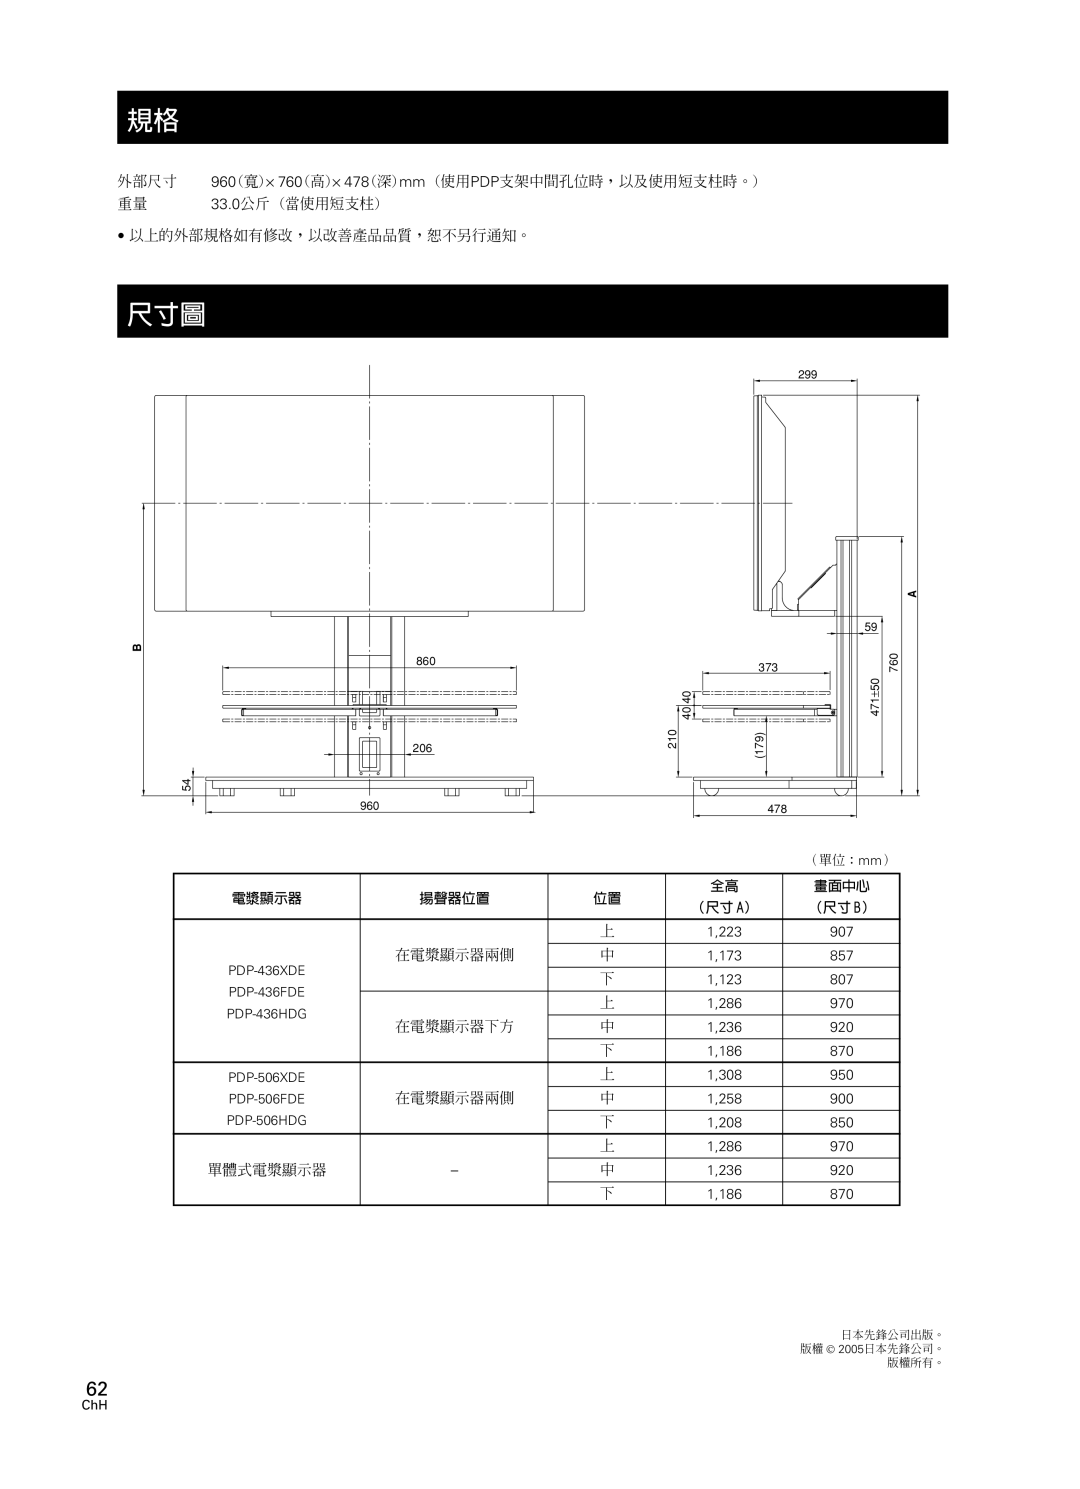 Pioneer PDK-FS05 manual 